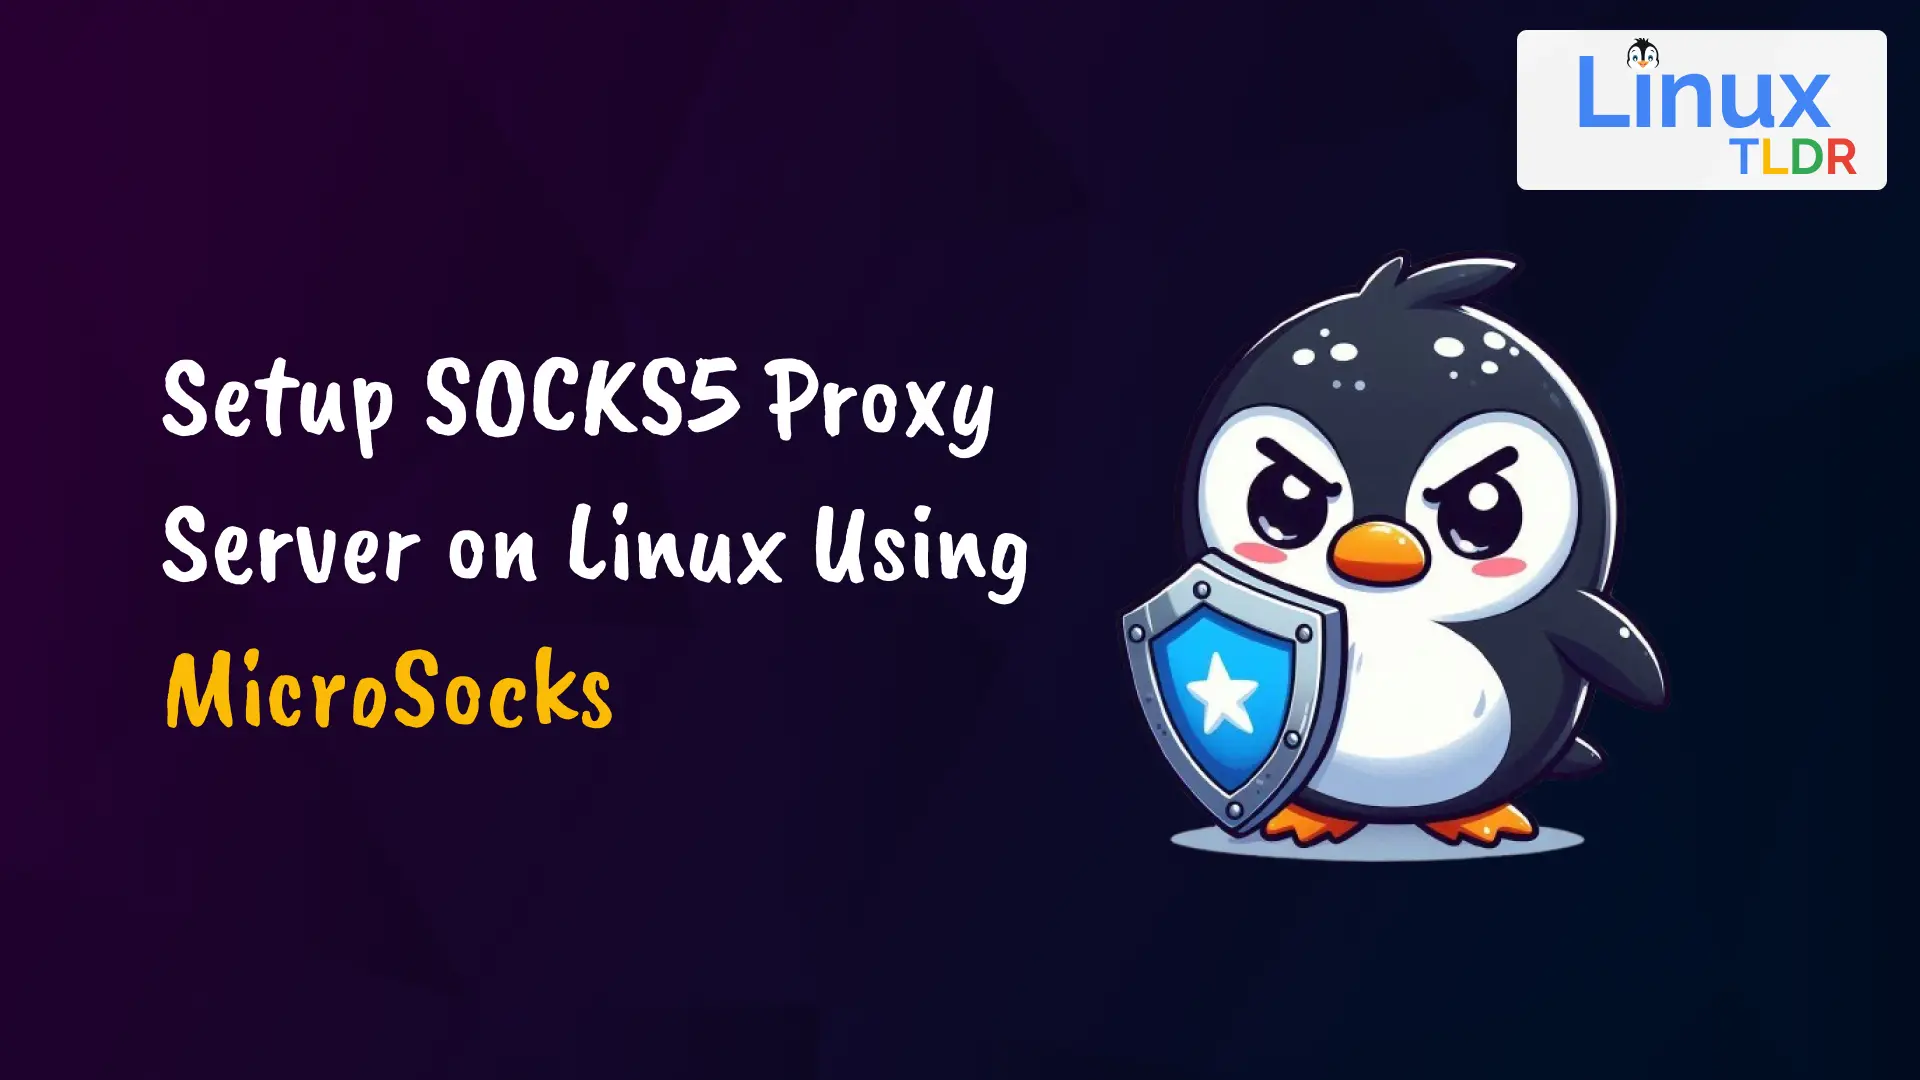 setup socks5 proxy server using microsocks